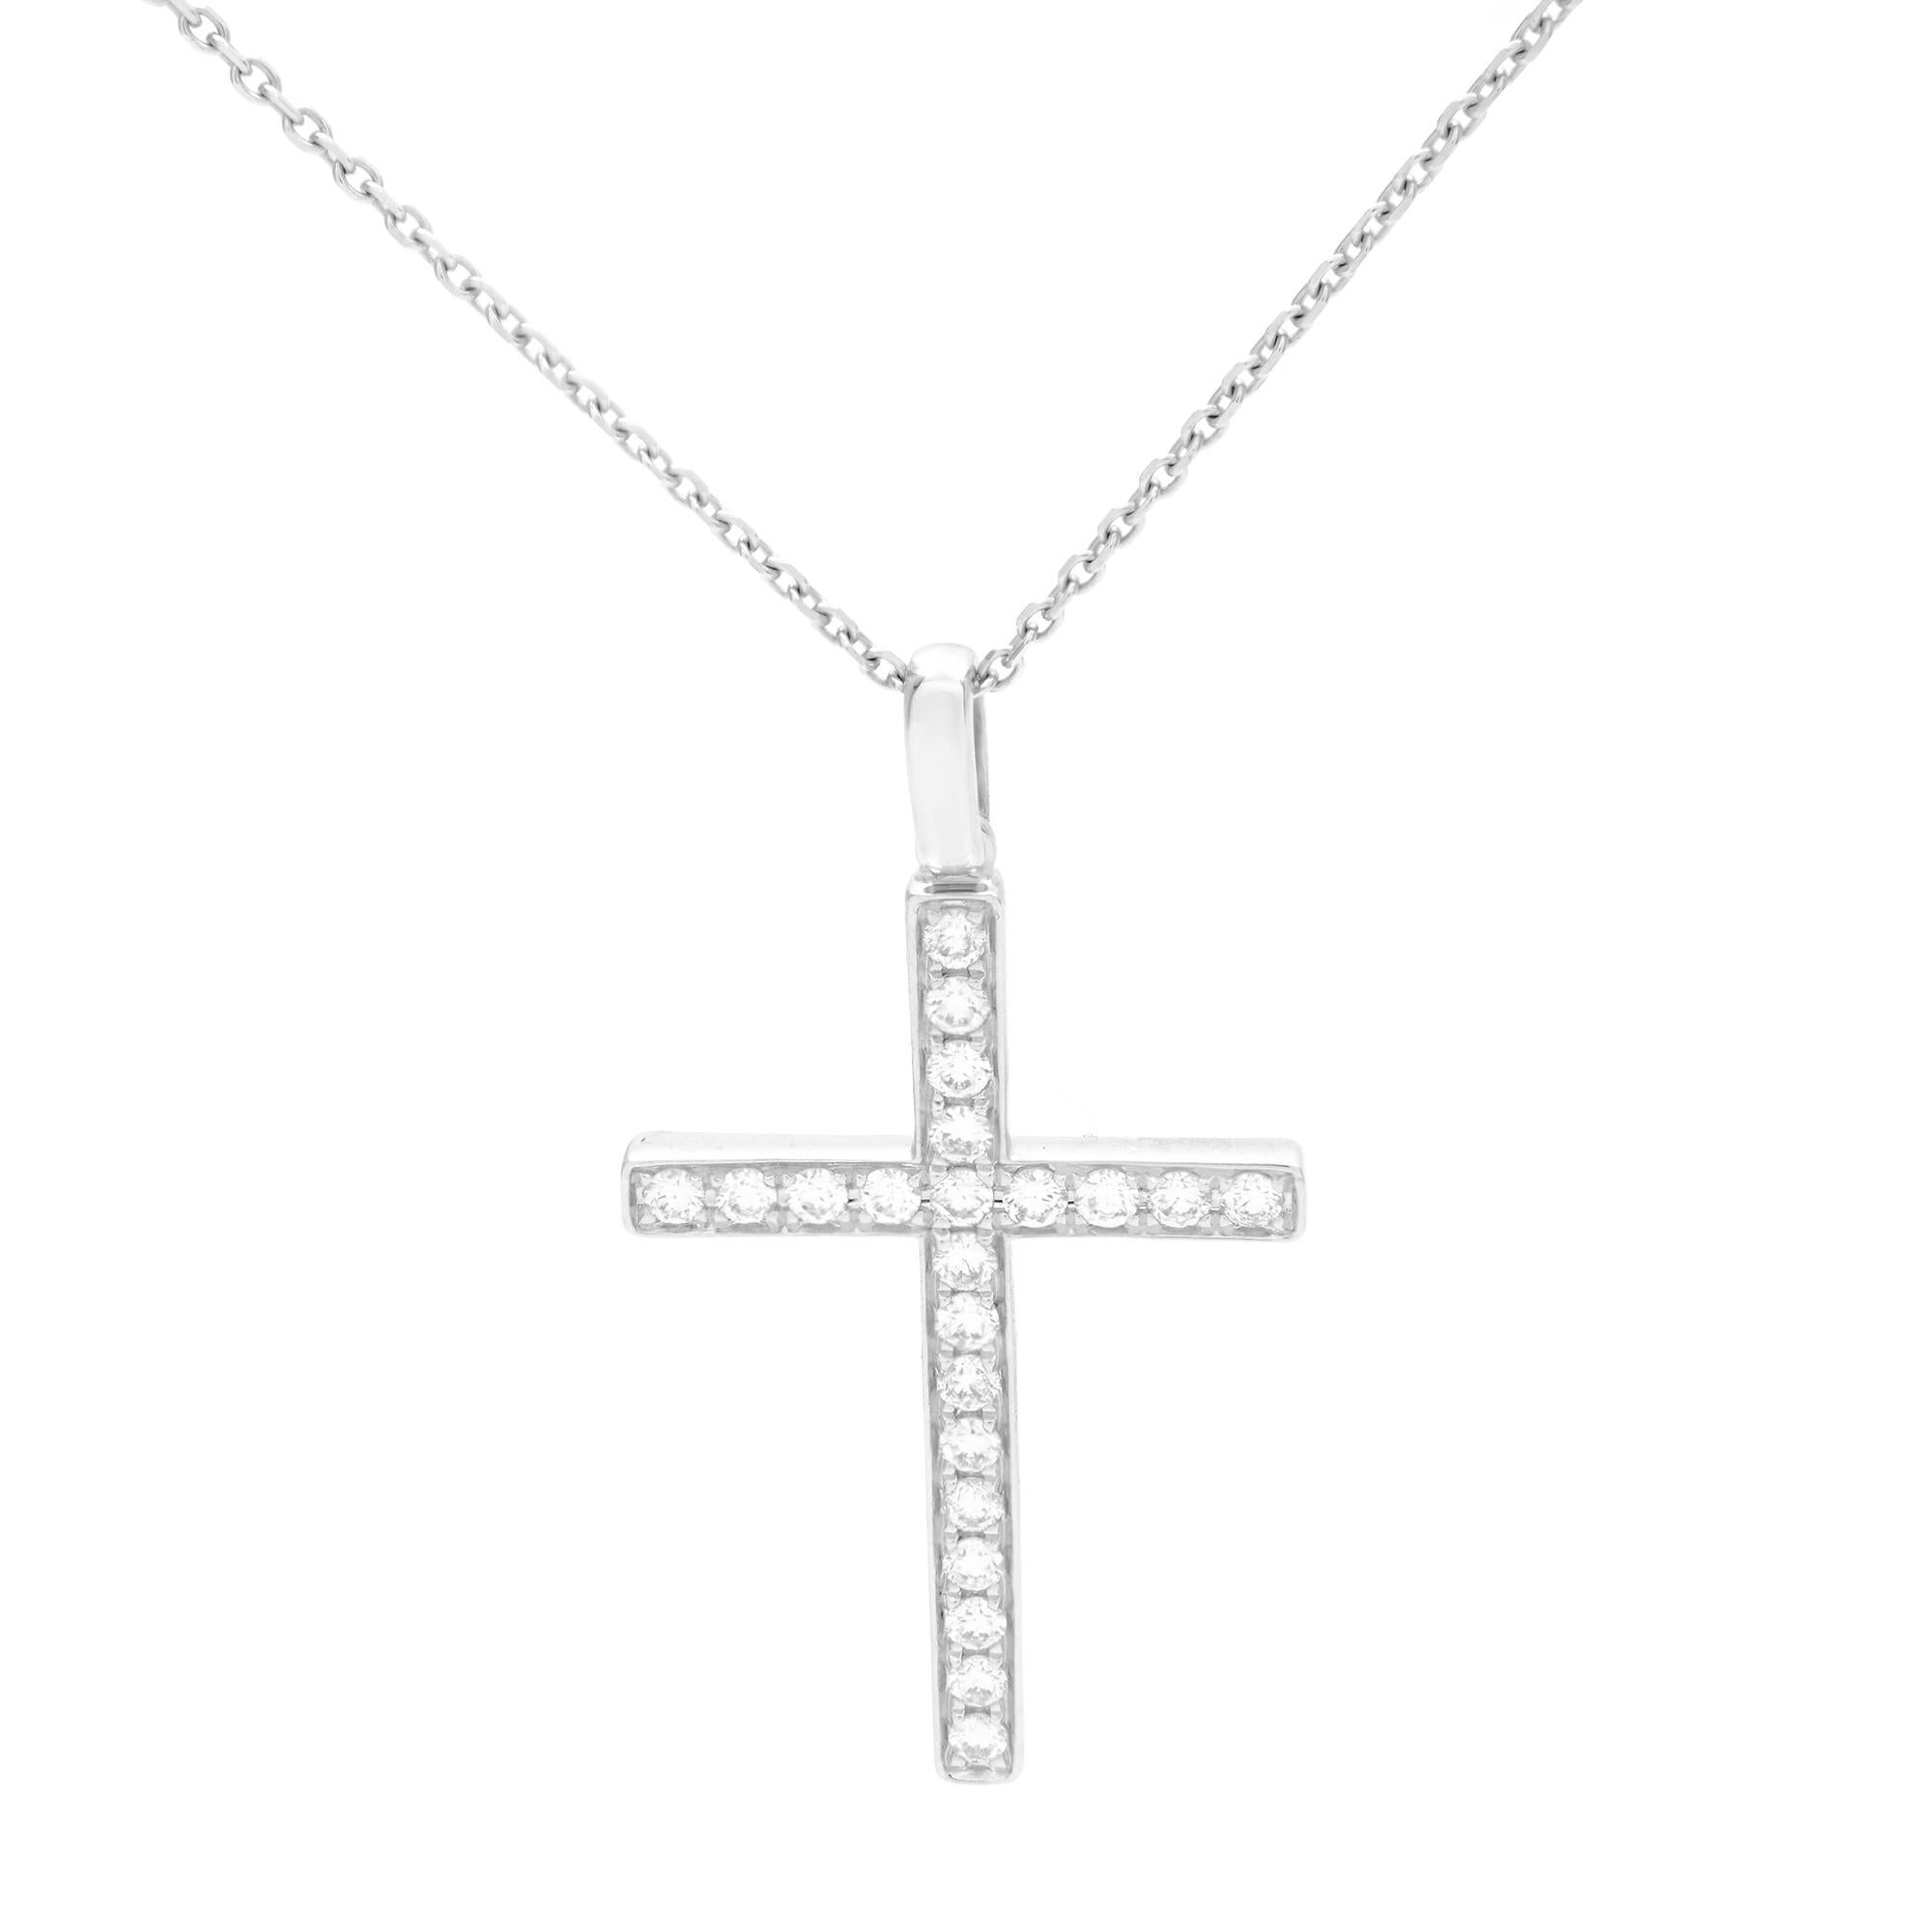 Round Cut Rachel Koen 18k White Gold Diamond Ladies Cross Pendant 0.46cttw For Sale